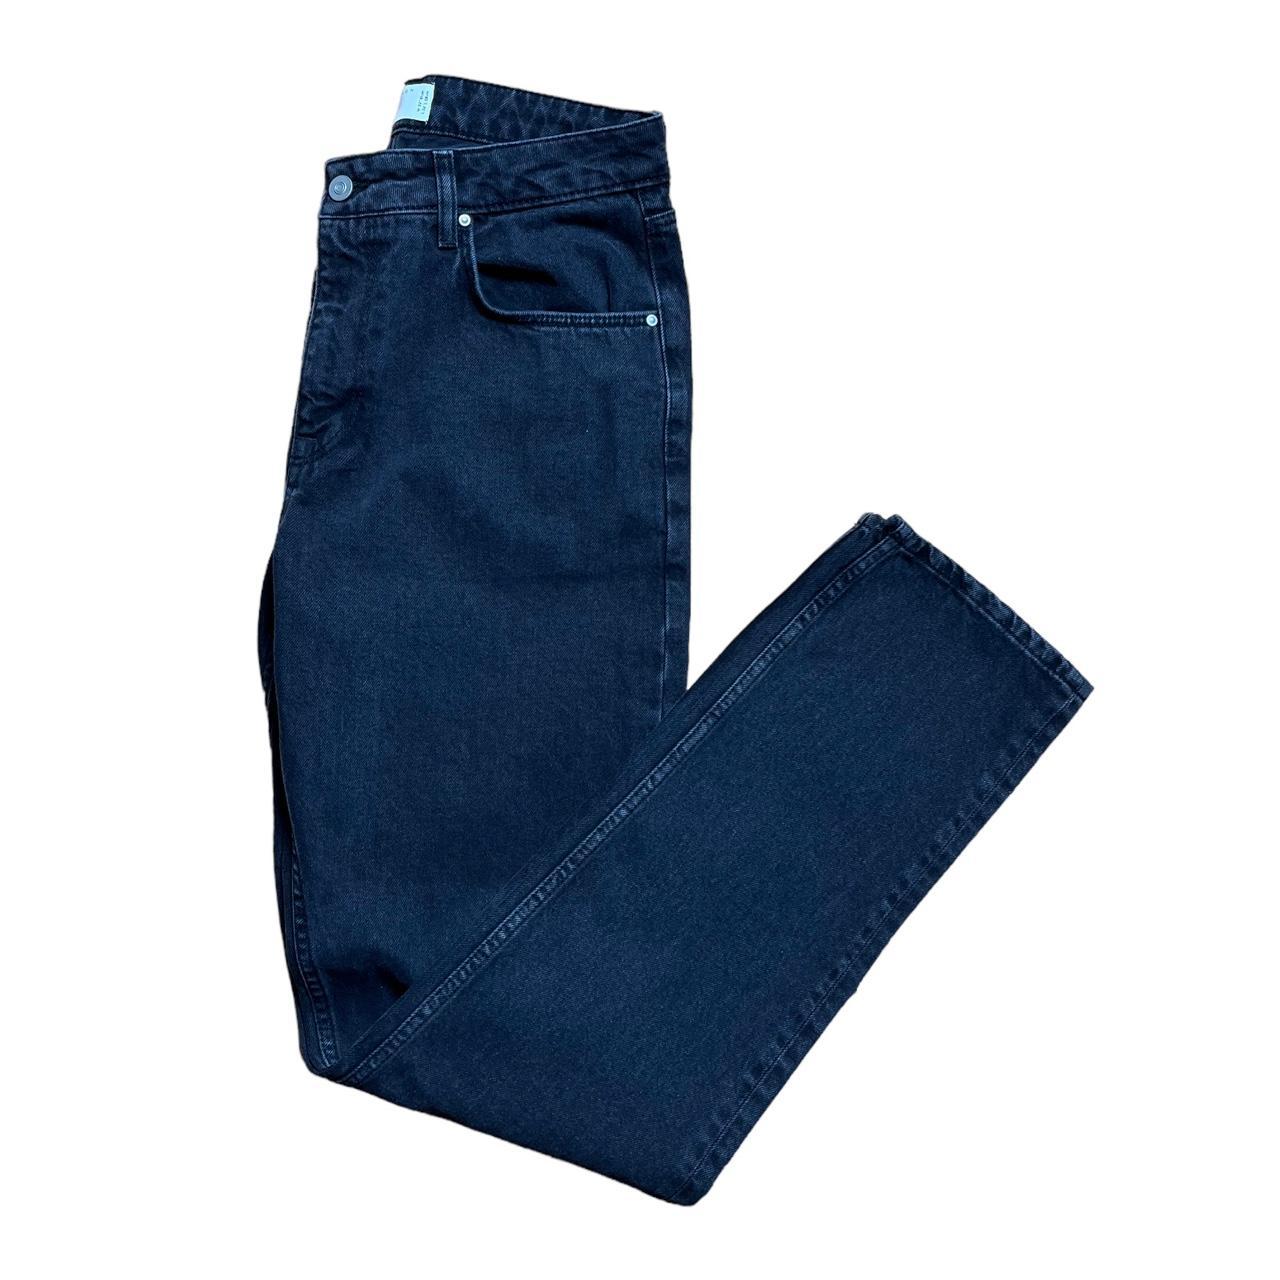 Black Straight Leg ASOS Design Jeans 📦 FREE... - Depop